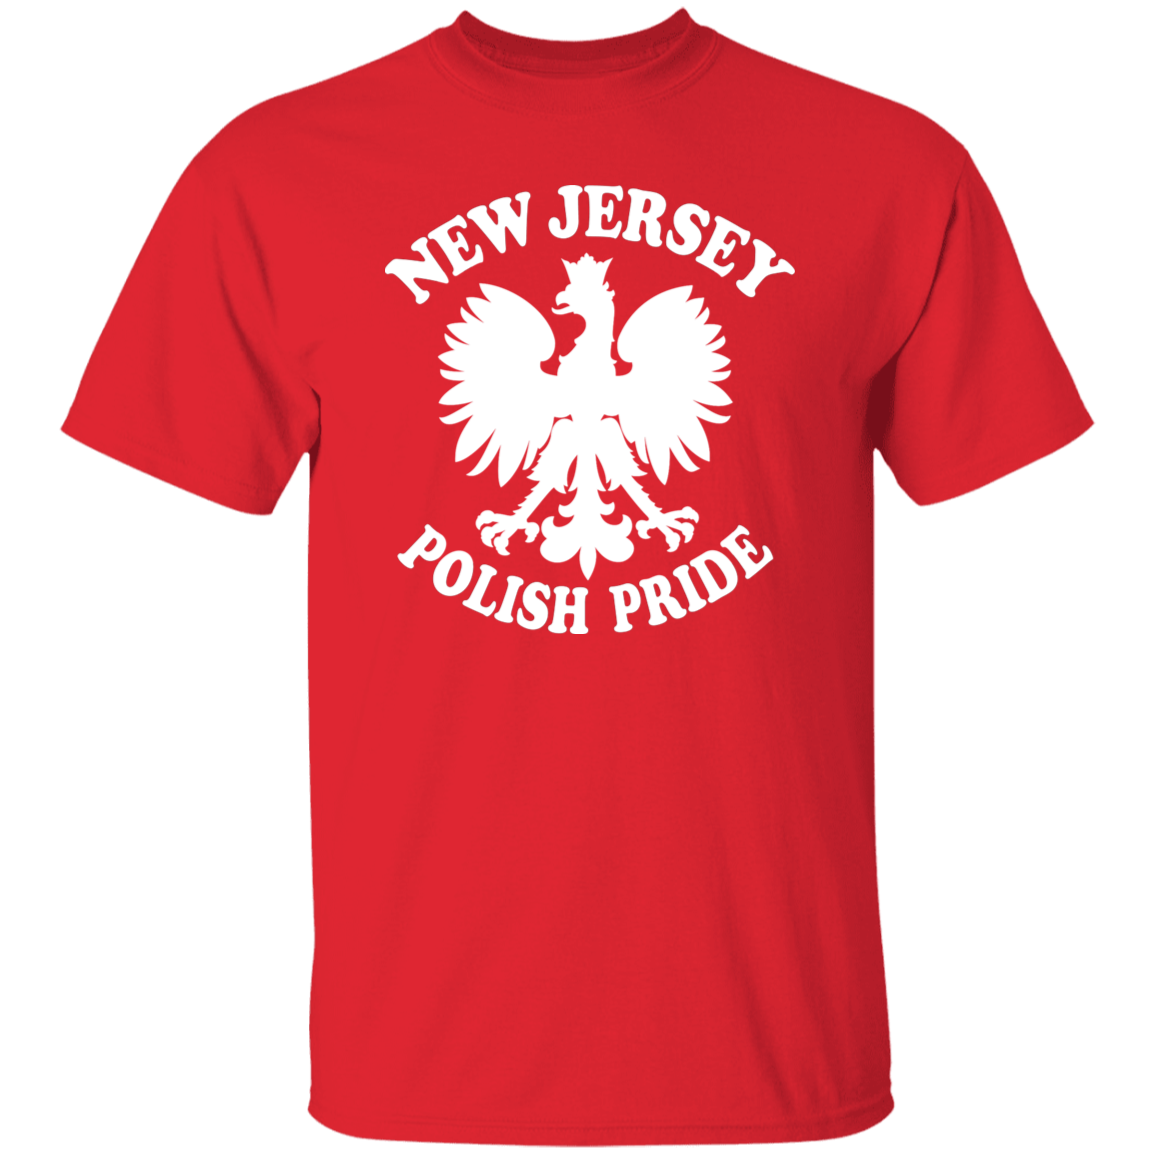 New Jersey Polish Pride Apparel CustomCat G500 5.3 oz. T-Shirt Red S